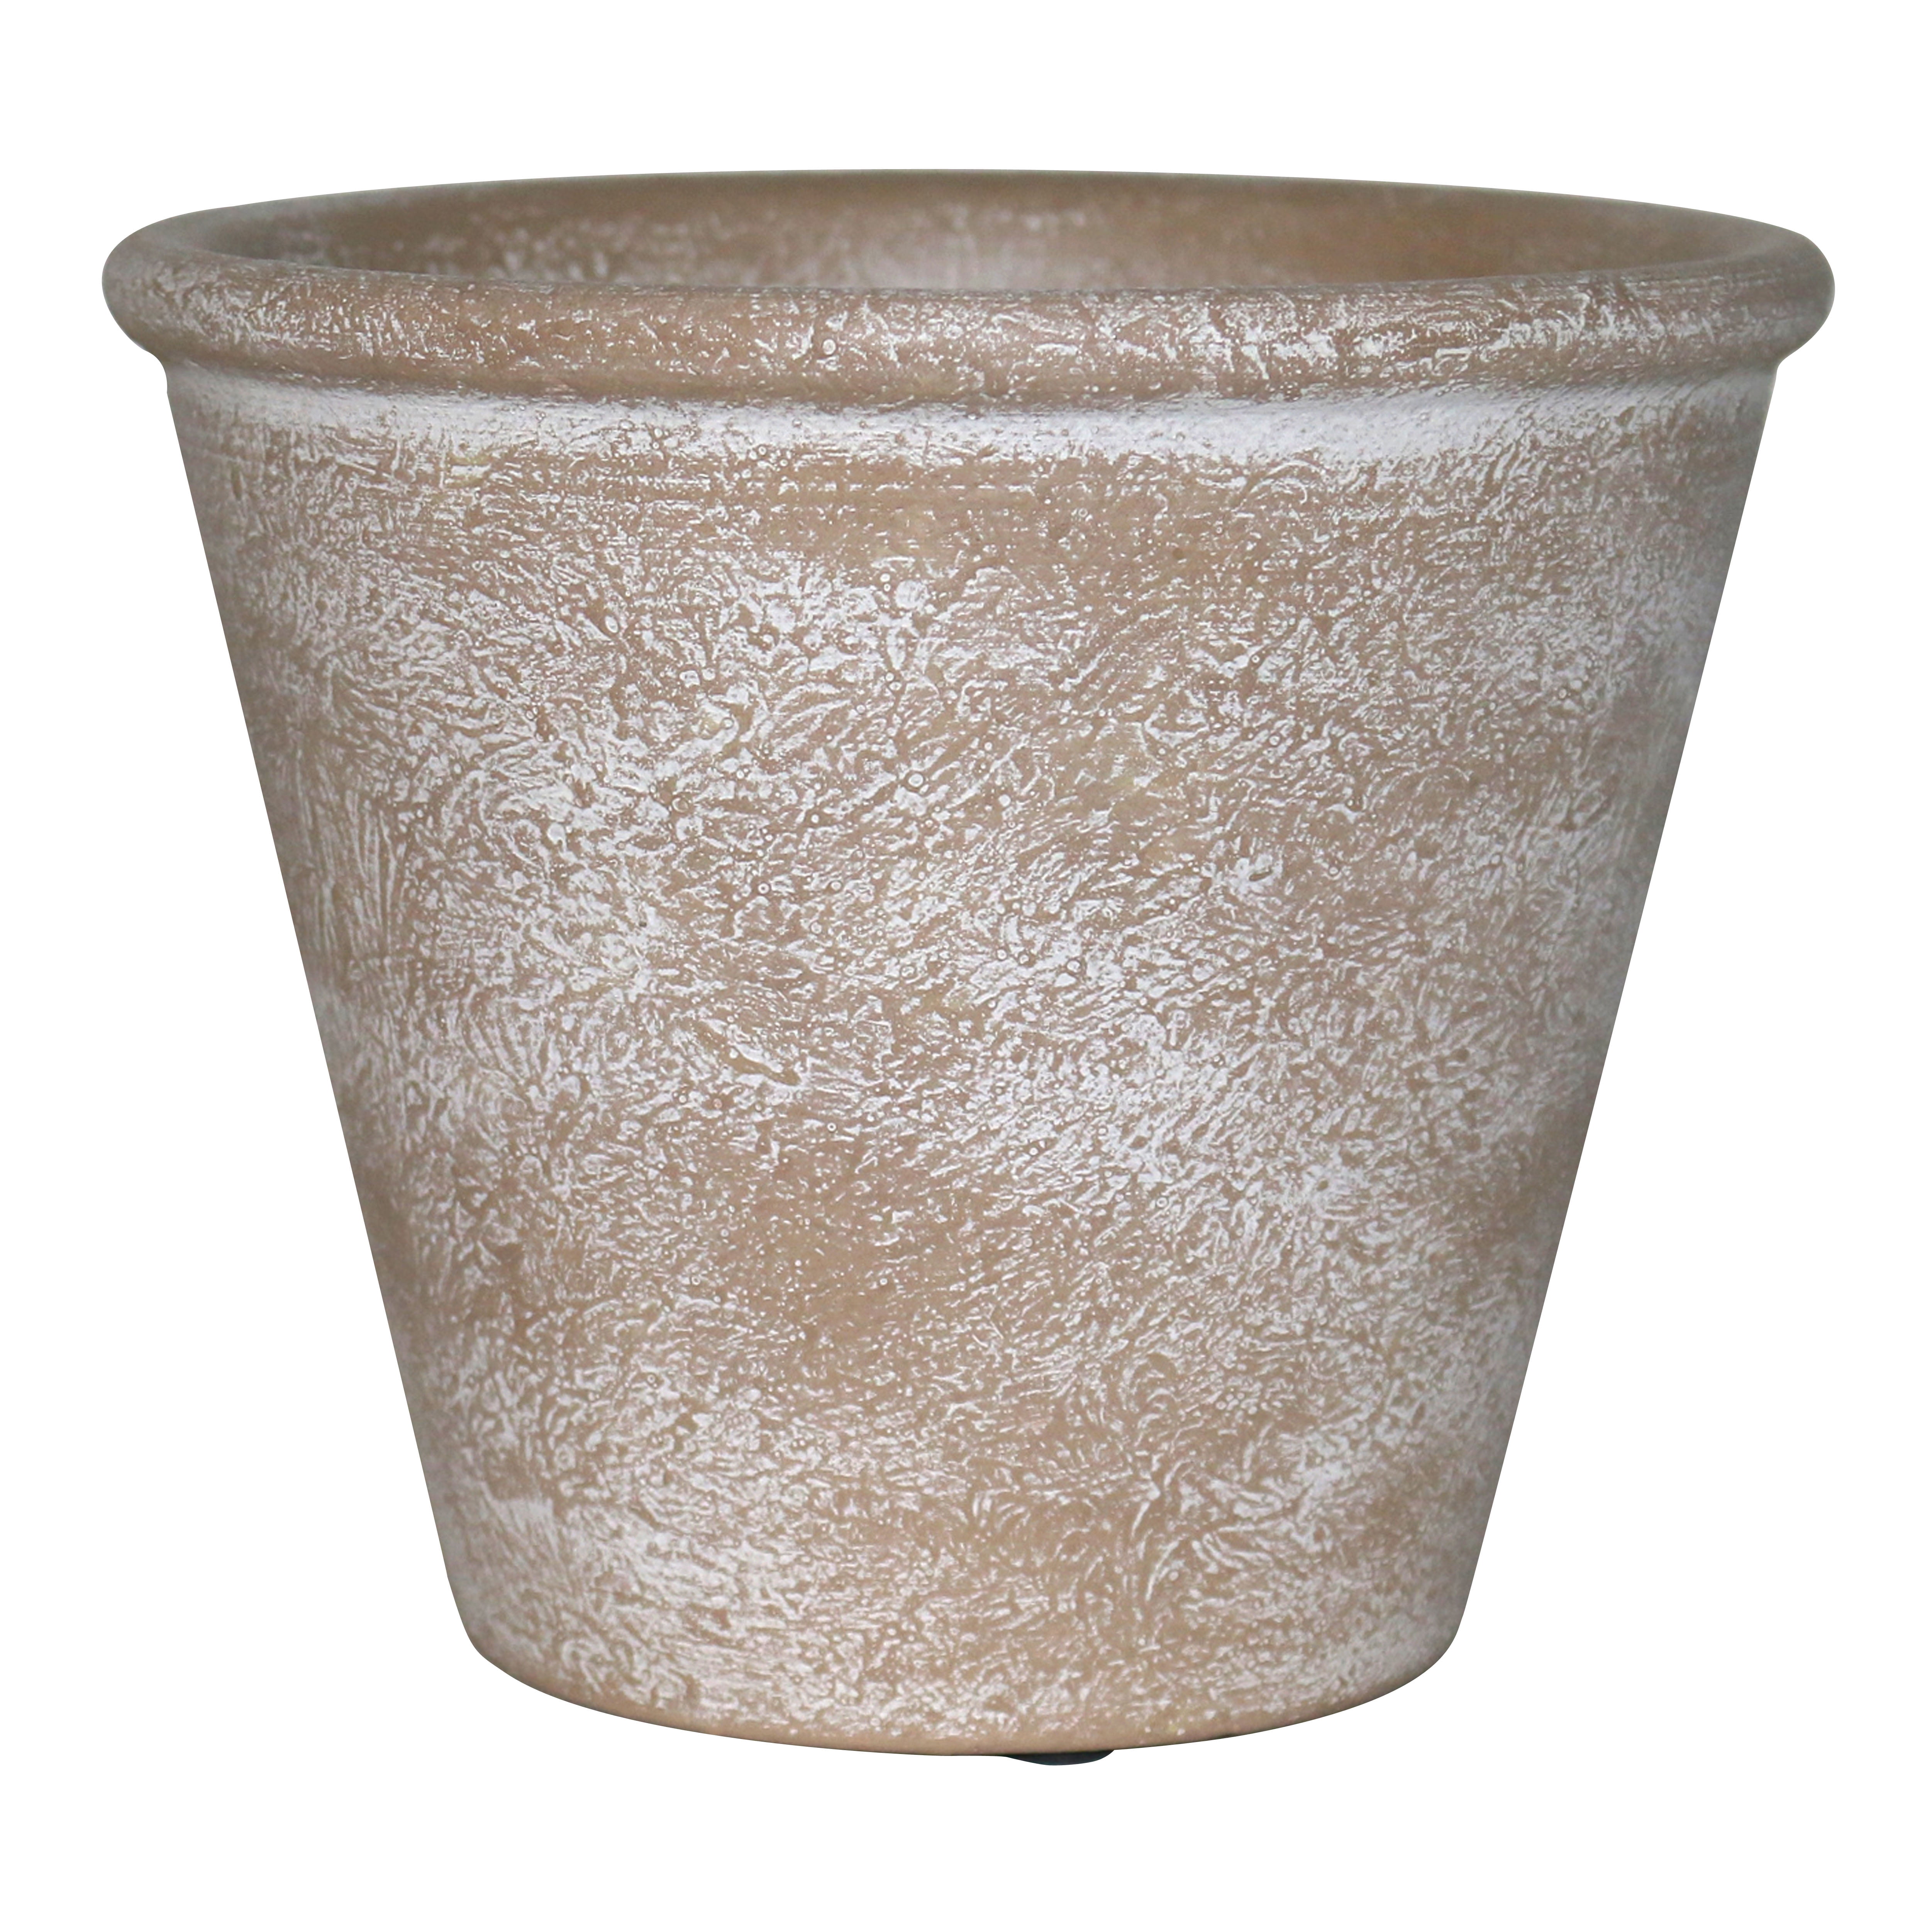 Better Homes & Gardens 6 inch Round Brown Ceramic Plant Pot